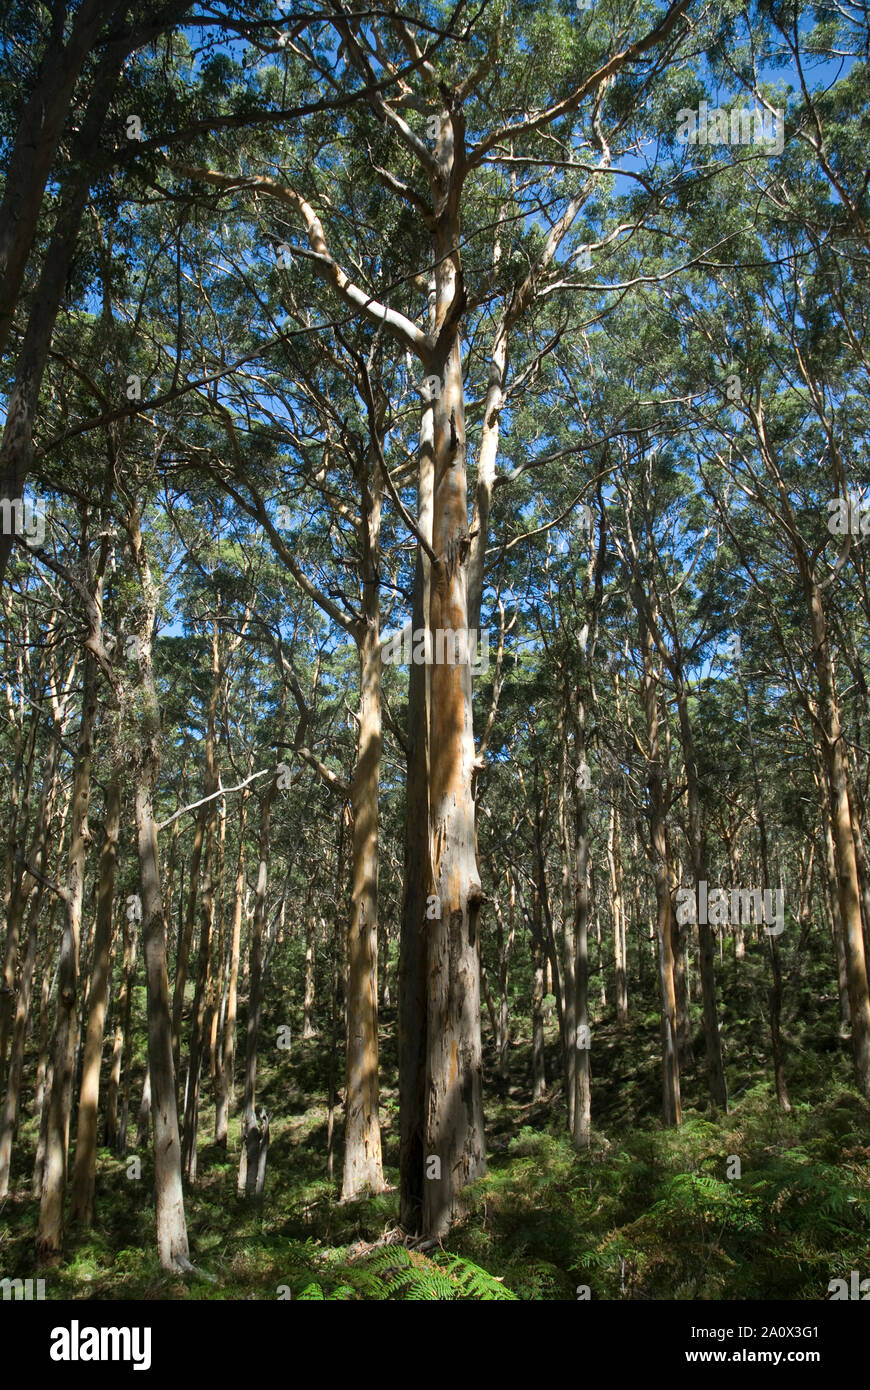 Forest of Eucalyptus trees, Myrtaceae Family, forest, Margaret River, Australia Stock Photo